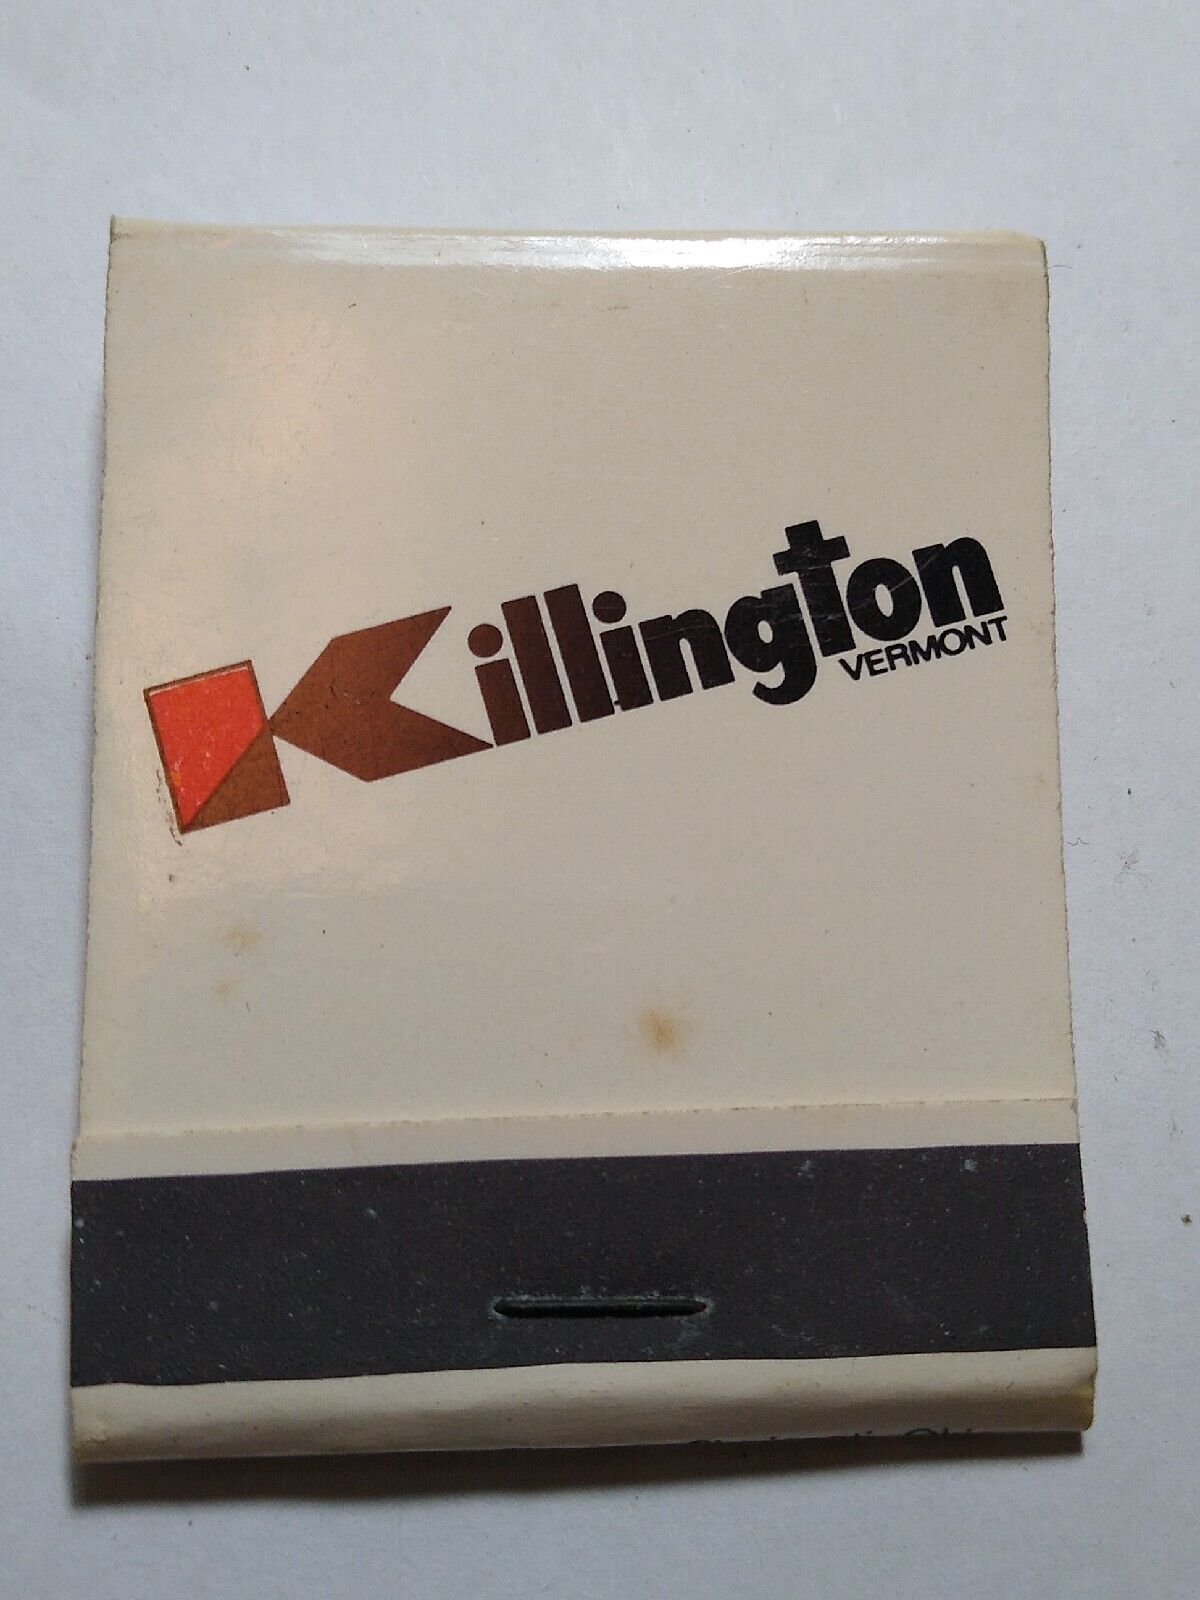 Killington Vermont Matchbook